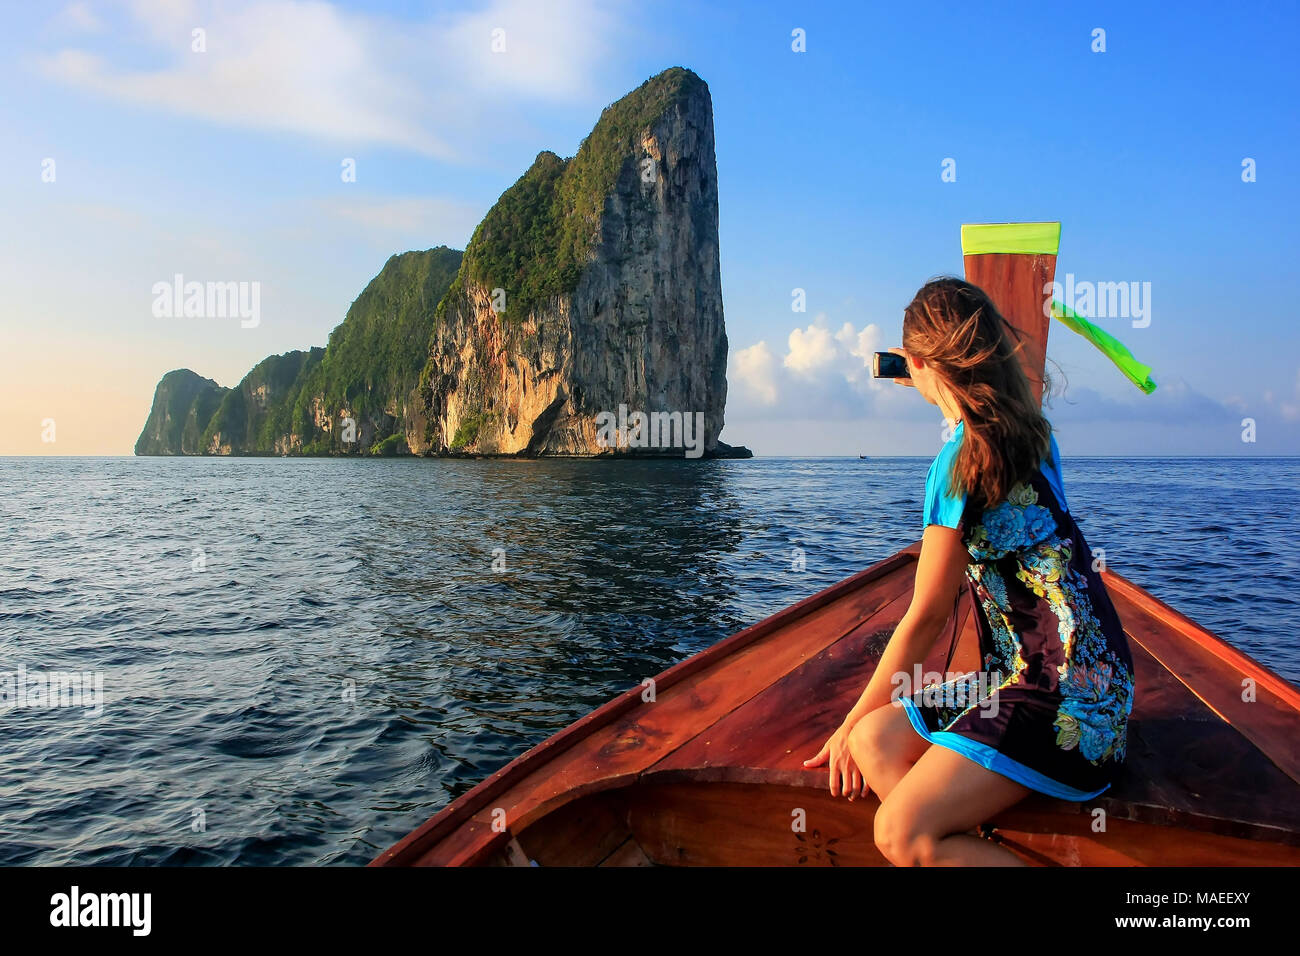 Junge Frau in der Front eines Langbooten nach Phi Phi Leh Island, Provinz Krabi, Thailand gehen, sitzen. Koh Phi Phi Leh ist Teil der Mu Ko Phi Phi Na Stockfoto